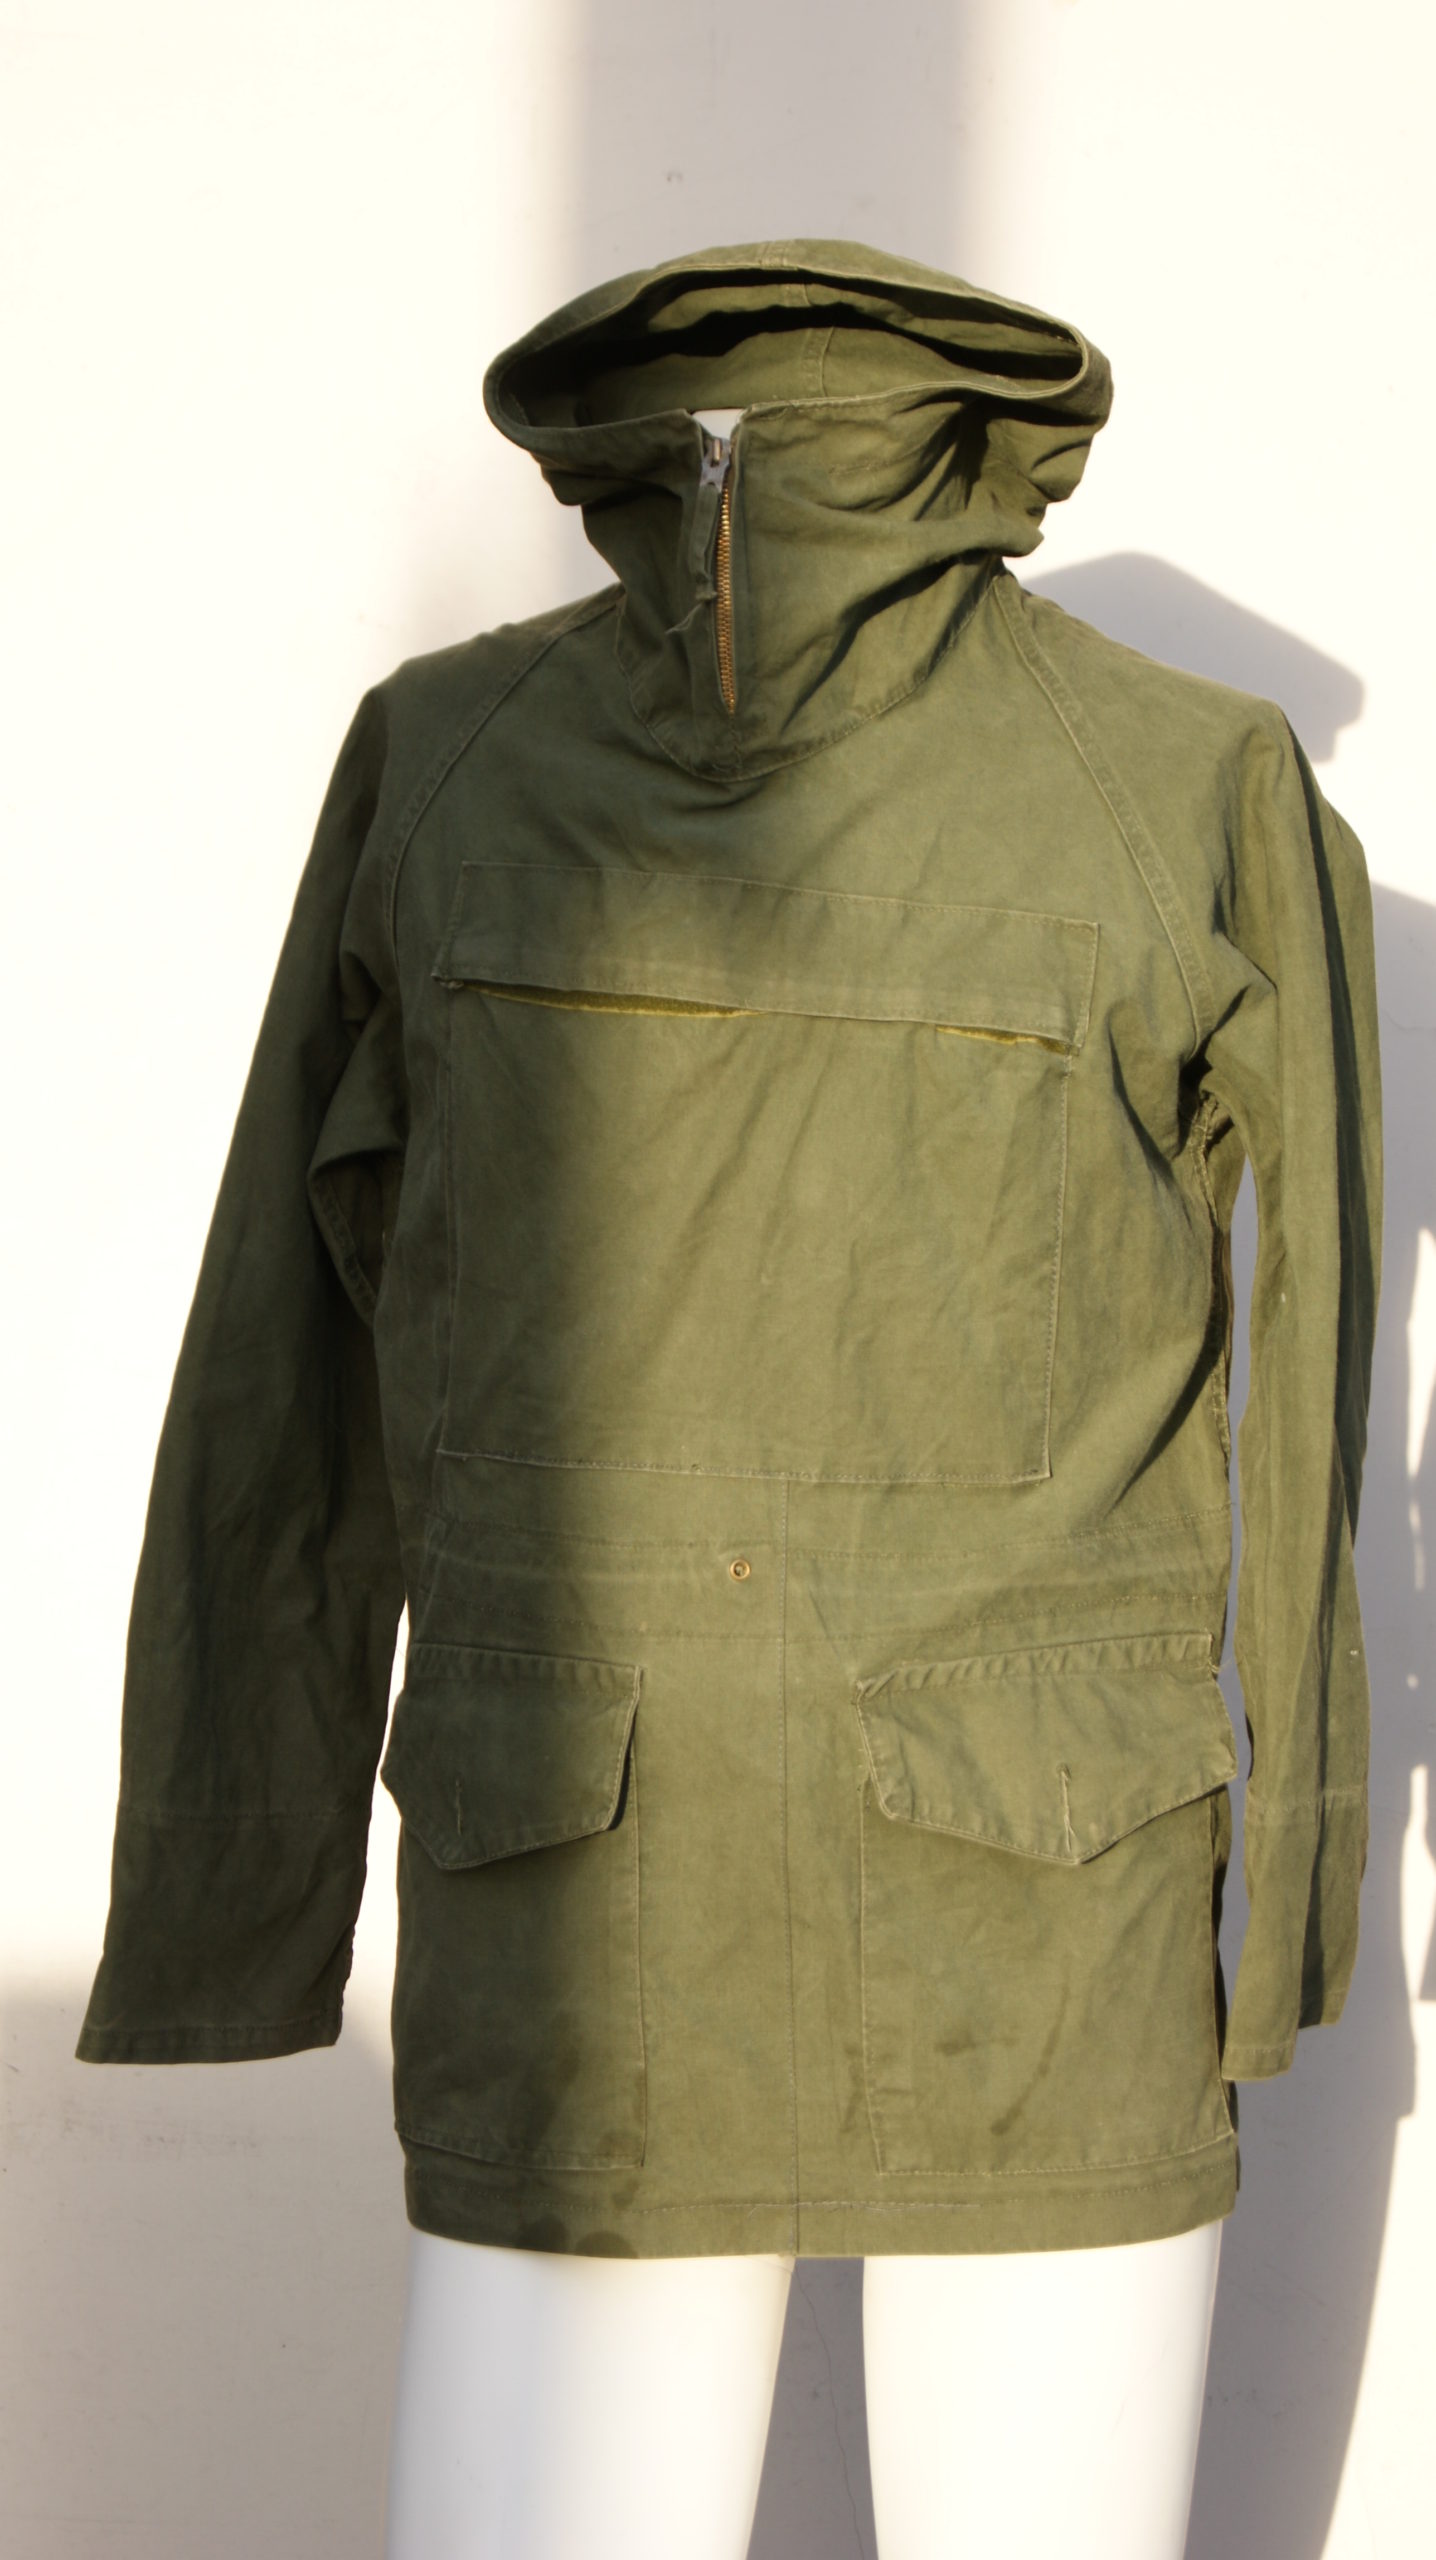 British Army Cadet/mountian Smock size 4 Clothing Gender-Neutral Adult Clothing Hoodies & Sweatshirts 